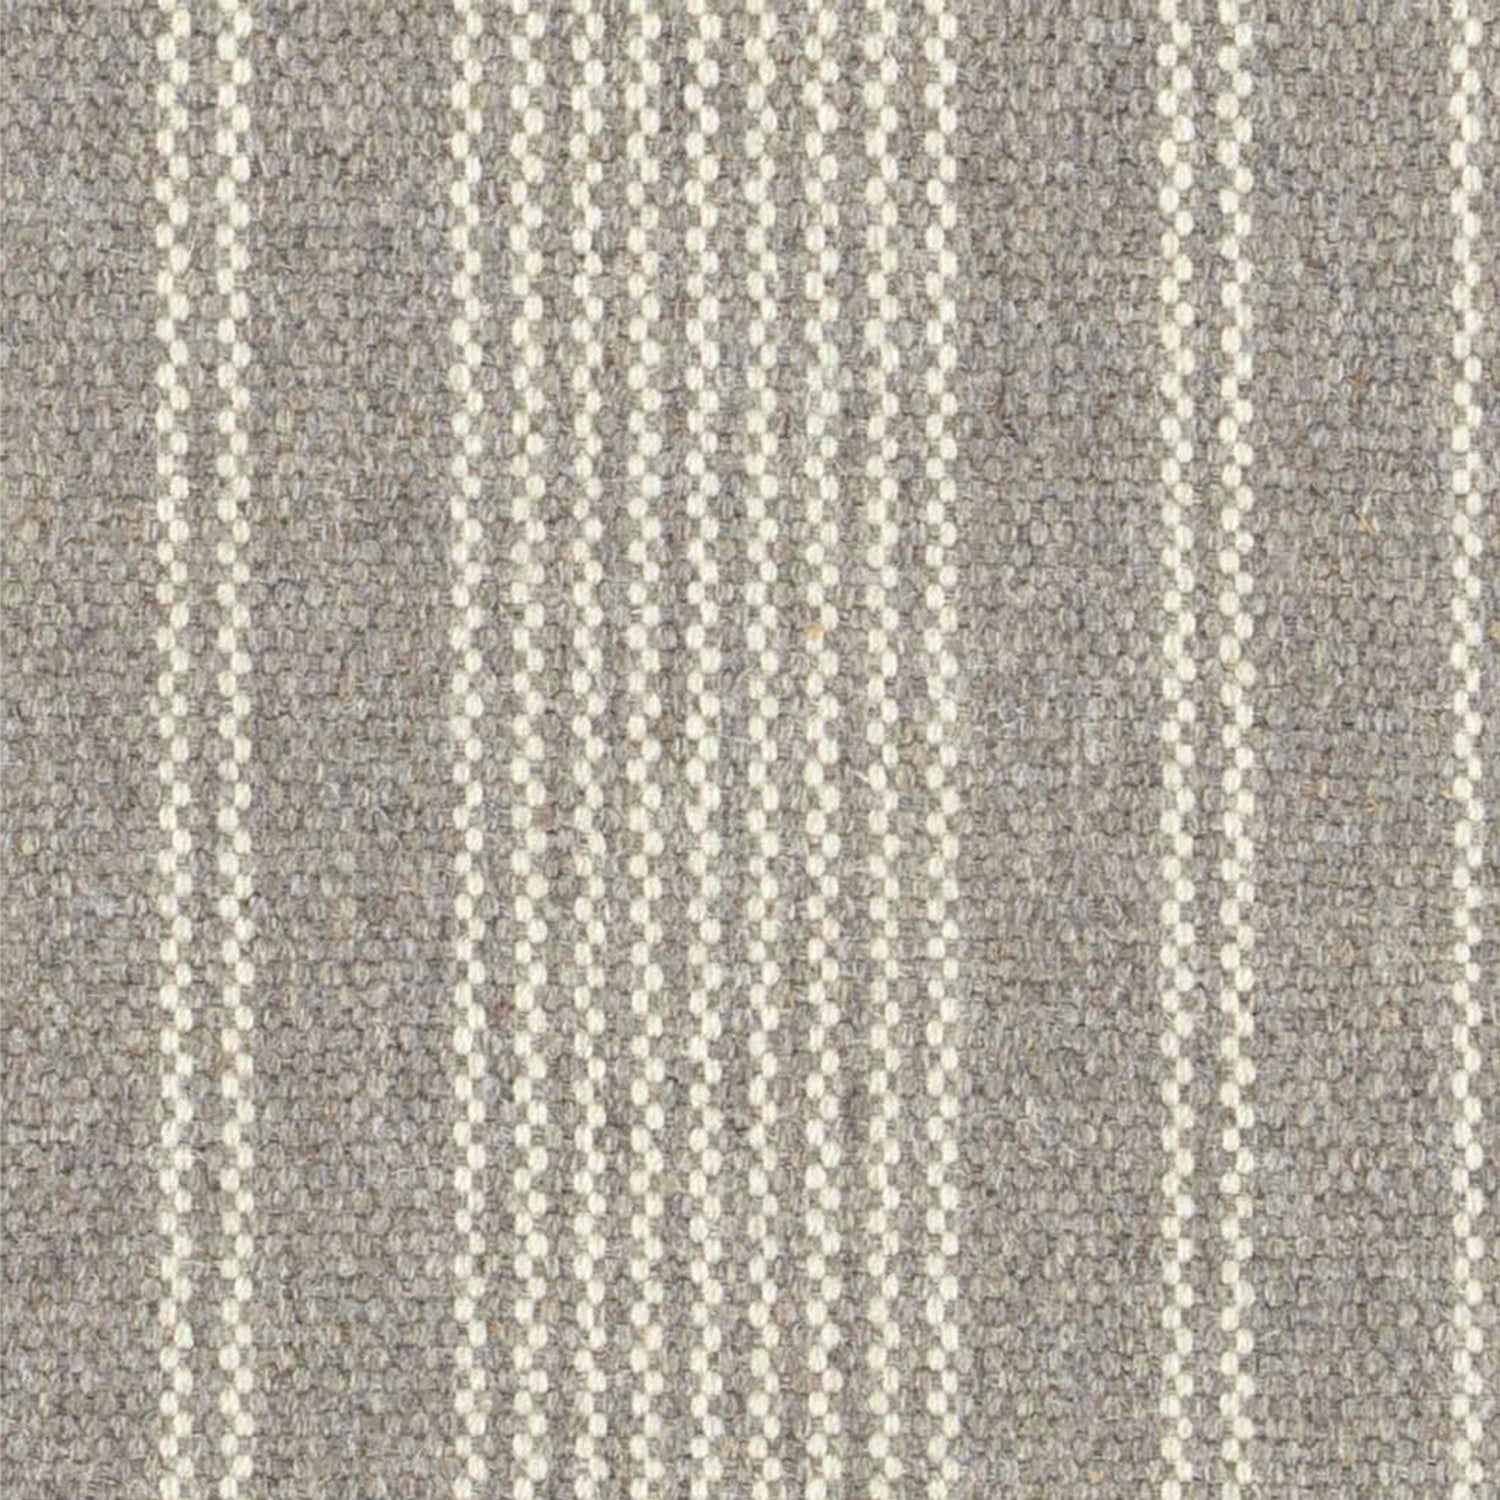 Wool broadloom carpet swatch in a variegated stripe weave in cream and gray.